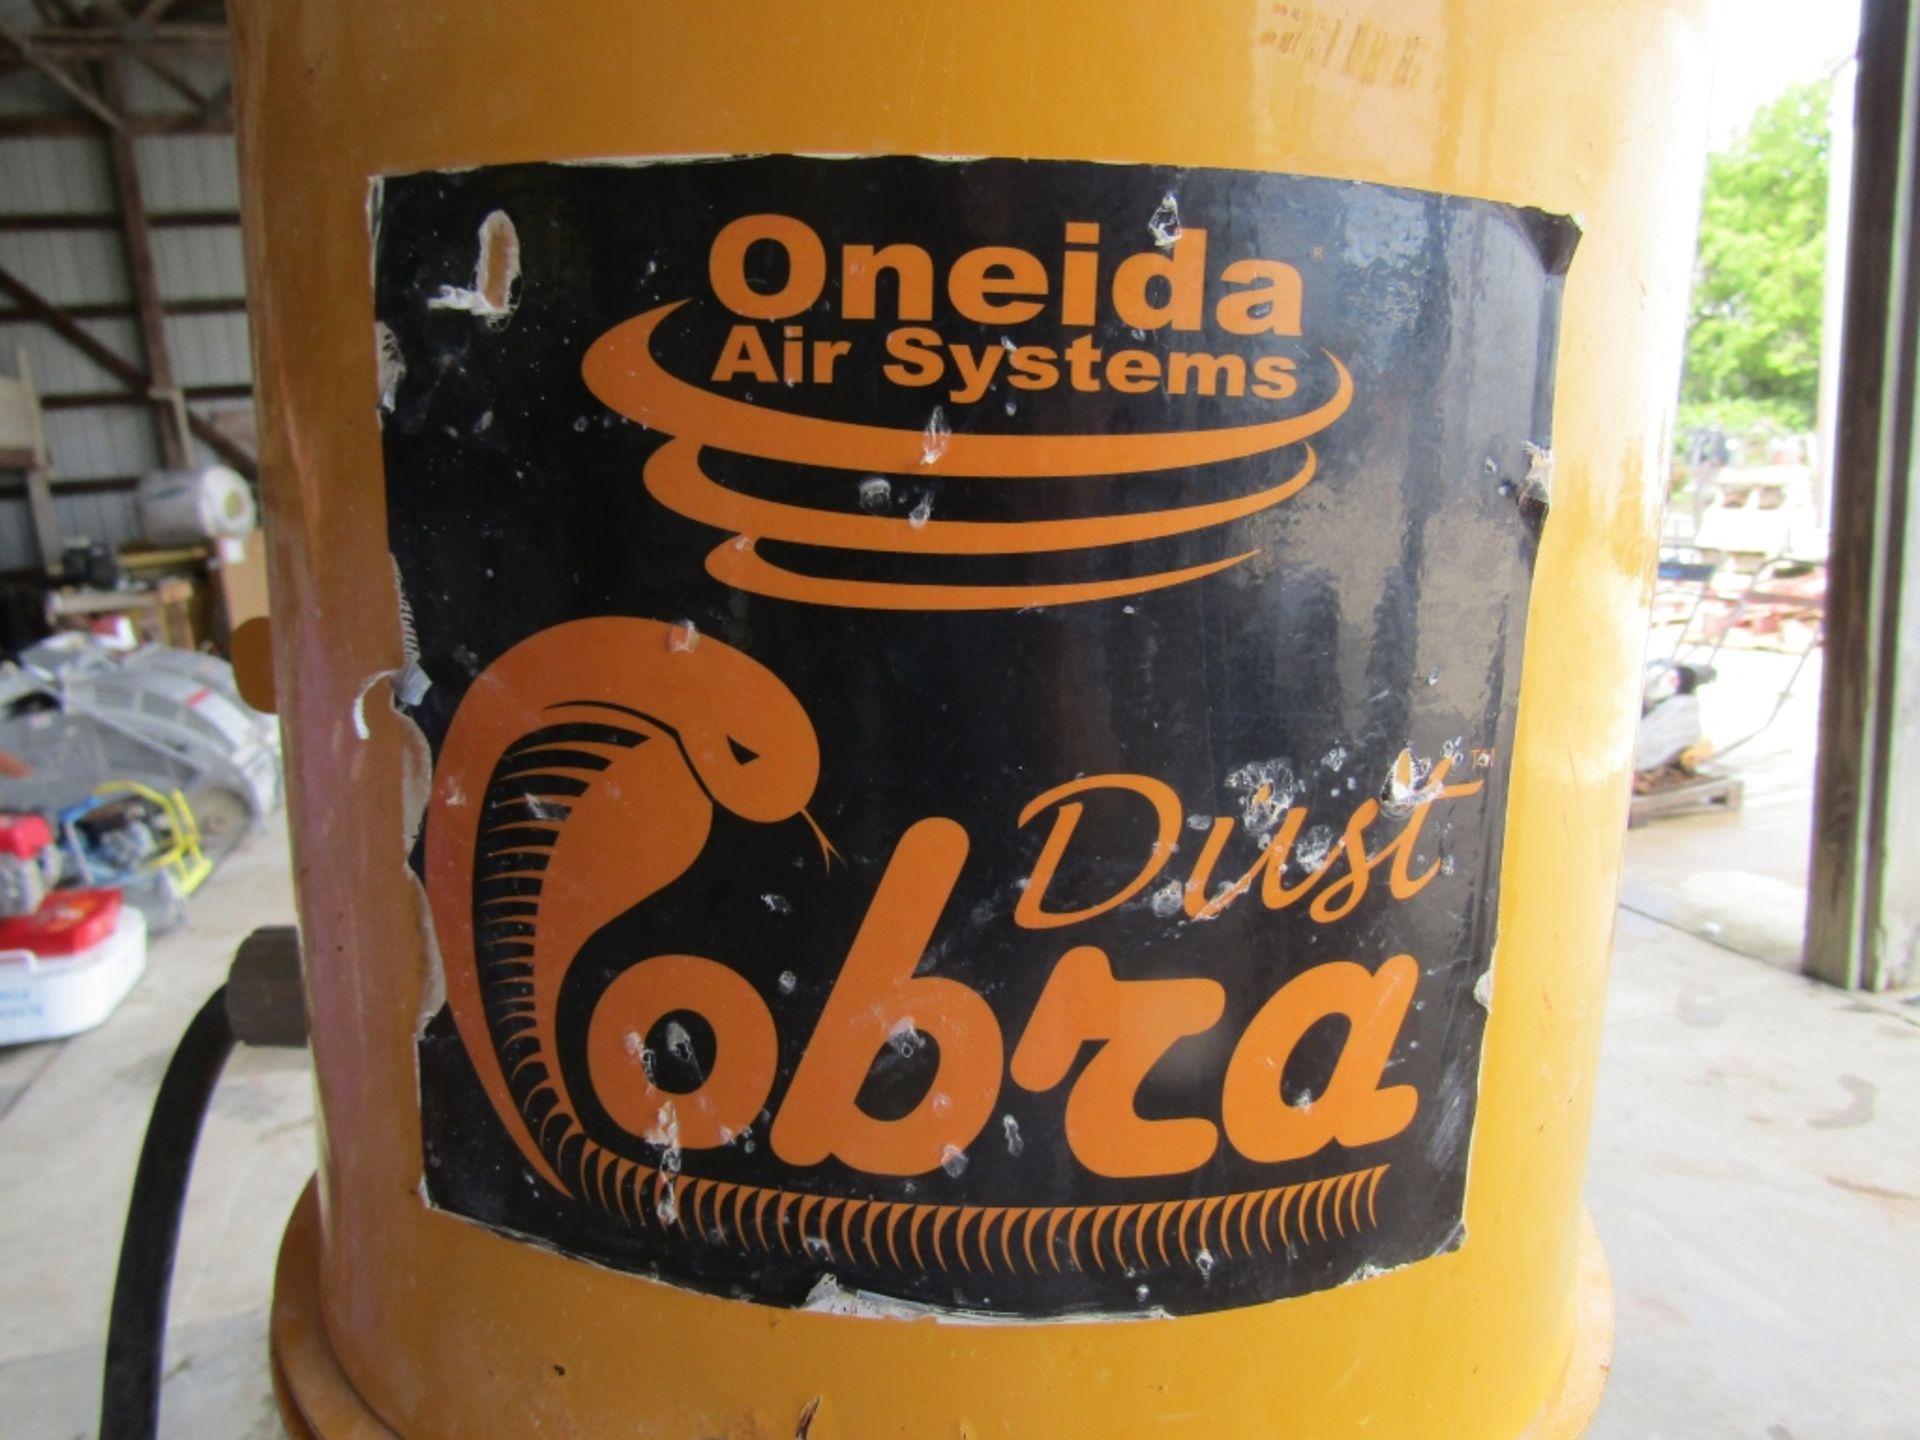 Oneida Air Systems, Model Dust Cobra, - Image 4 of 4